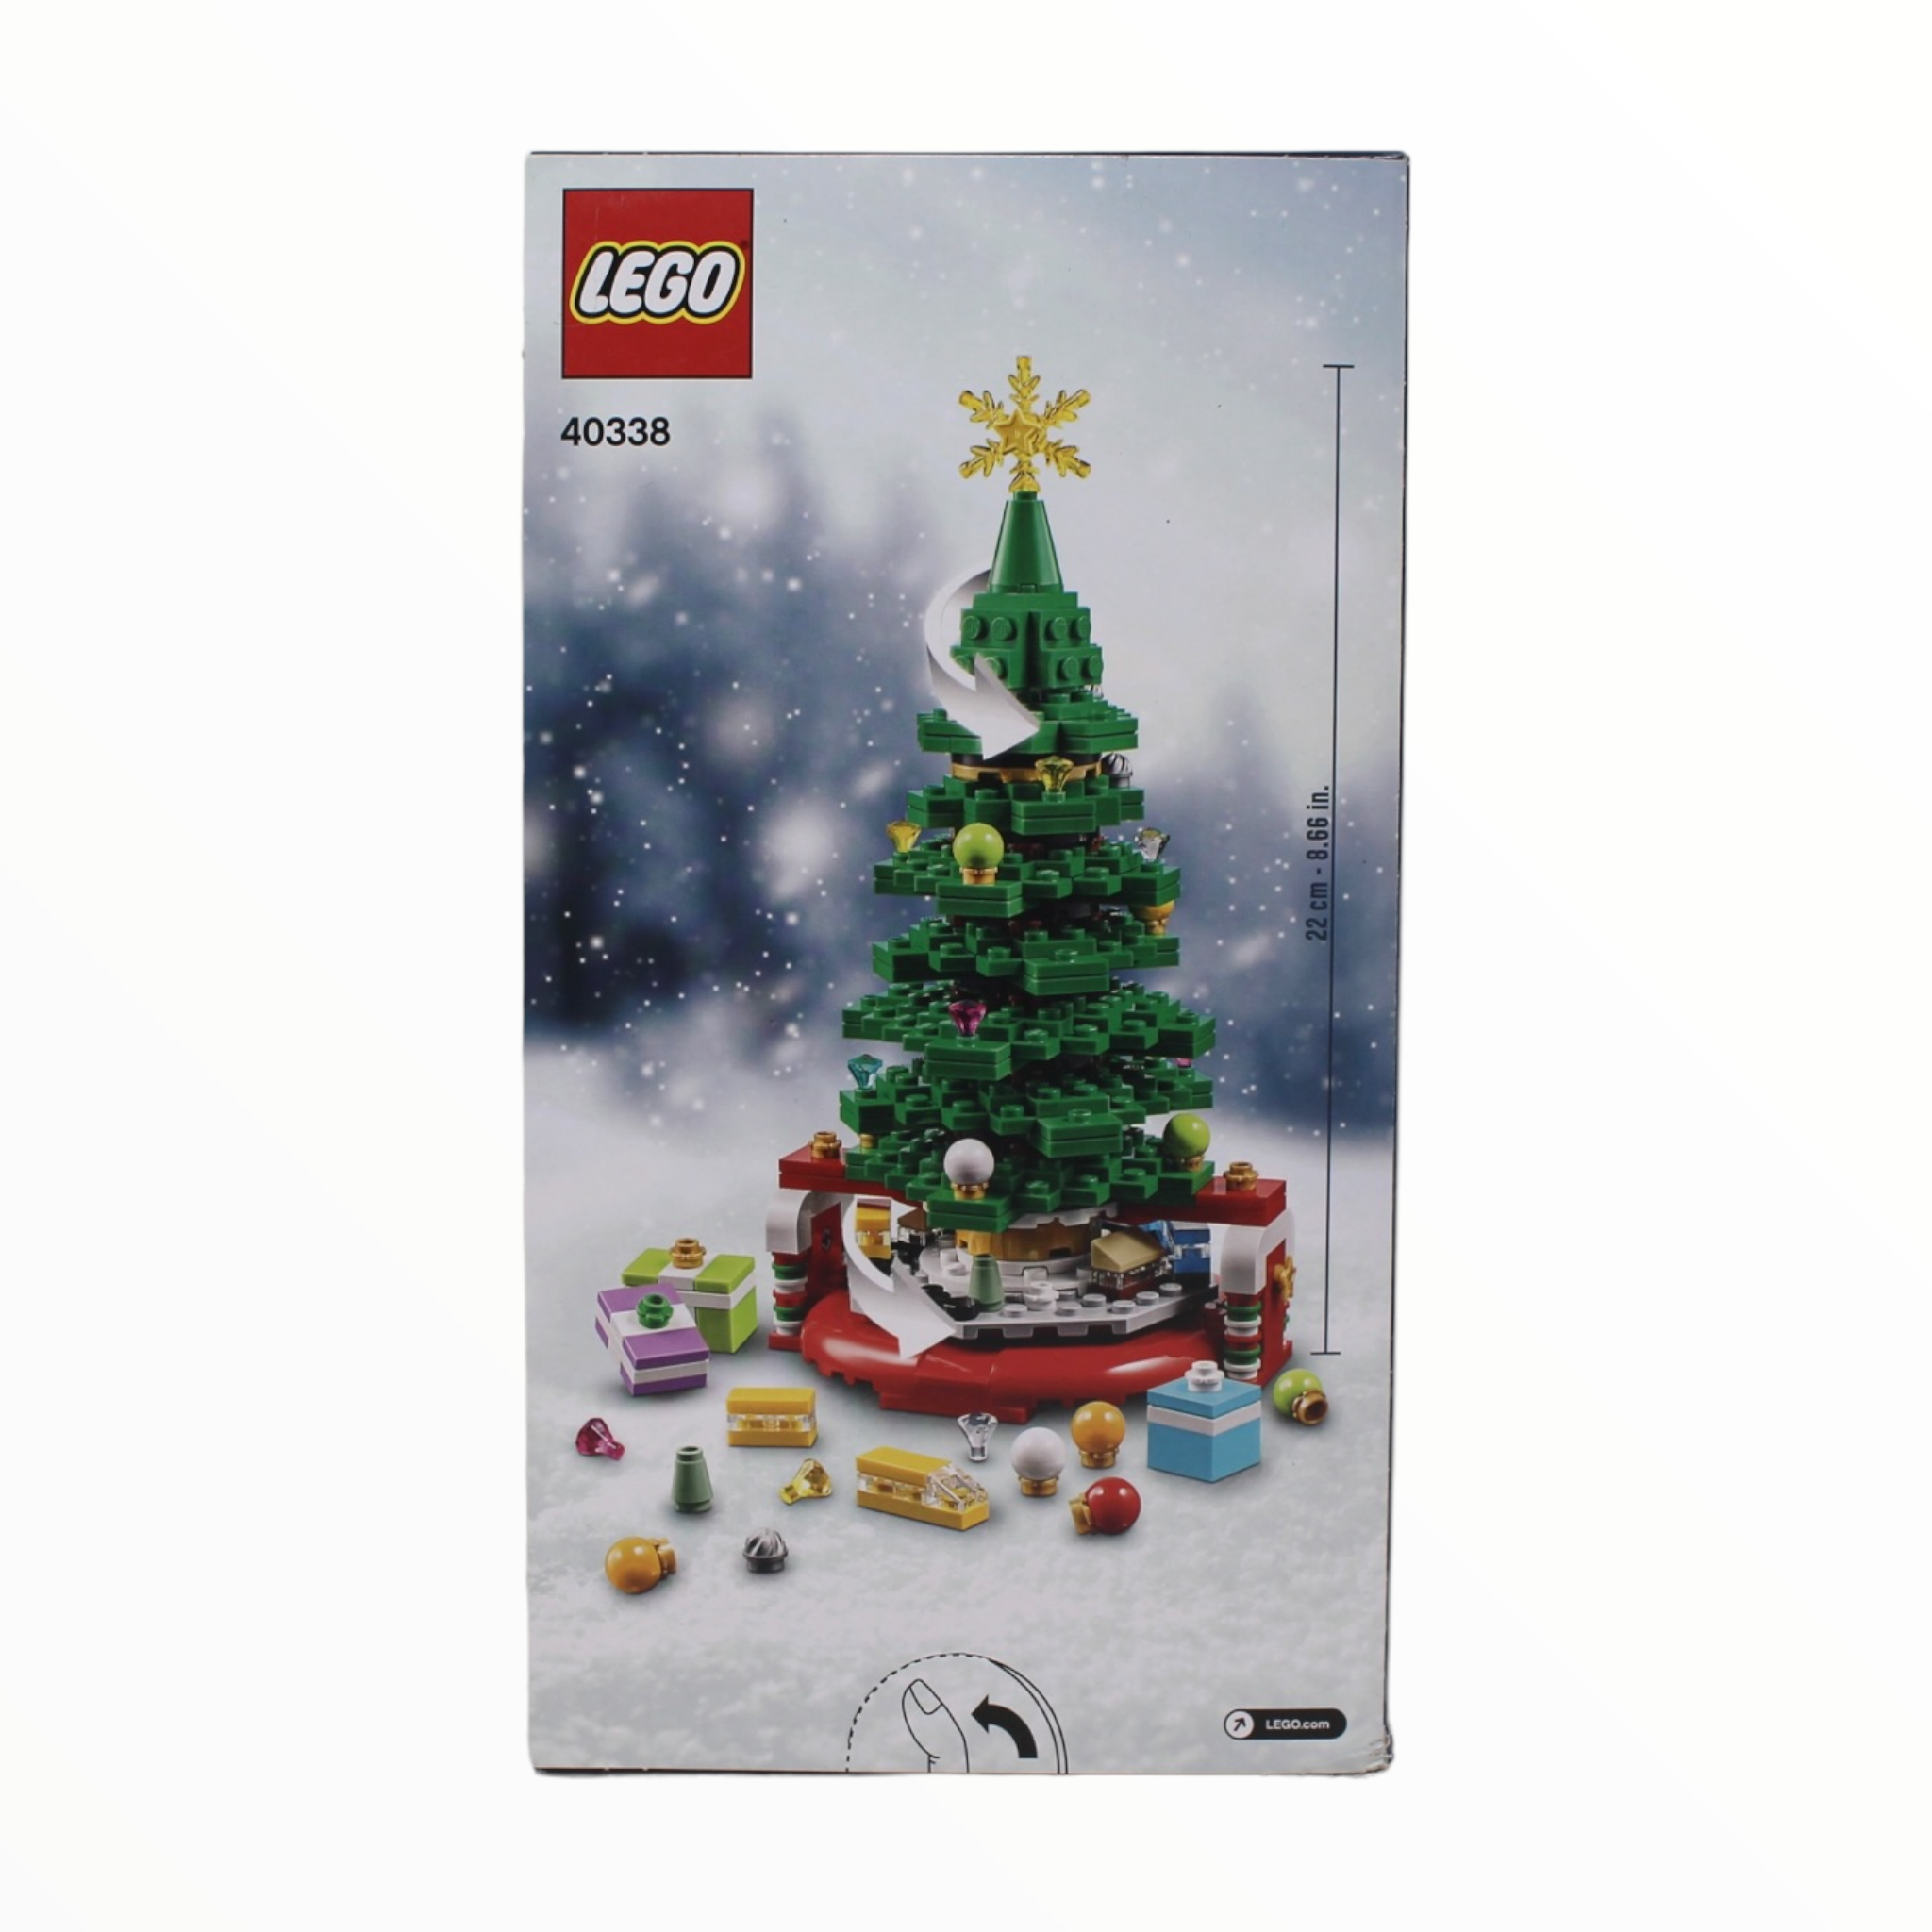 Retired Set 40338 LEGO Christmas Tree (2019)